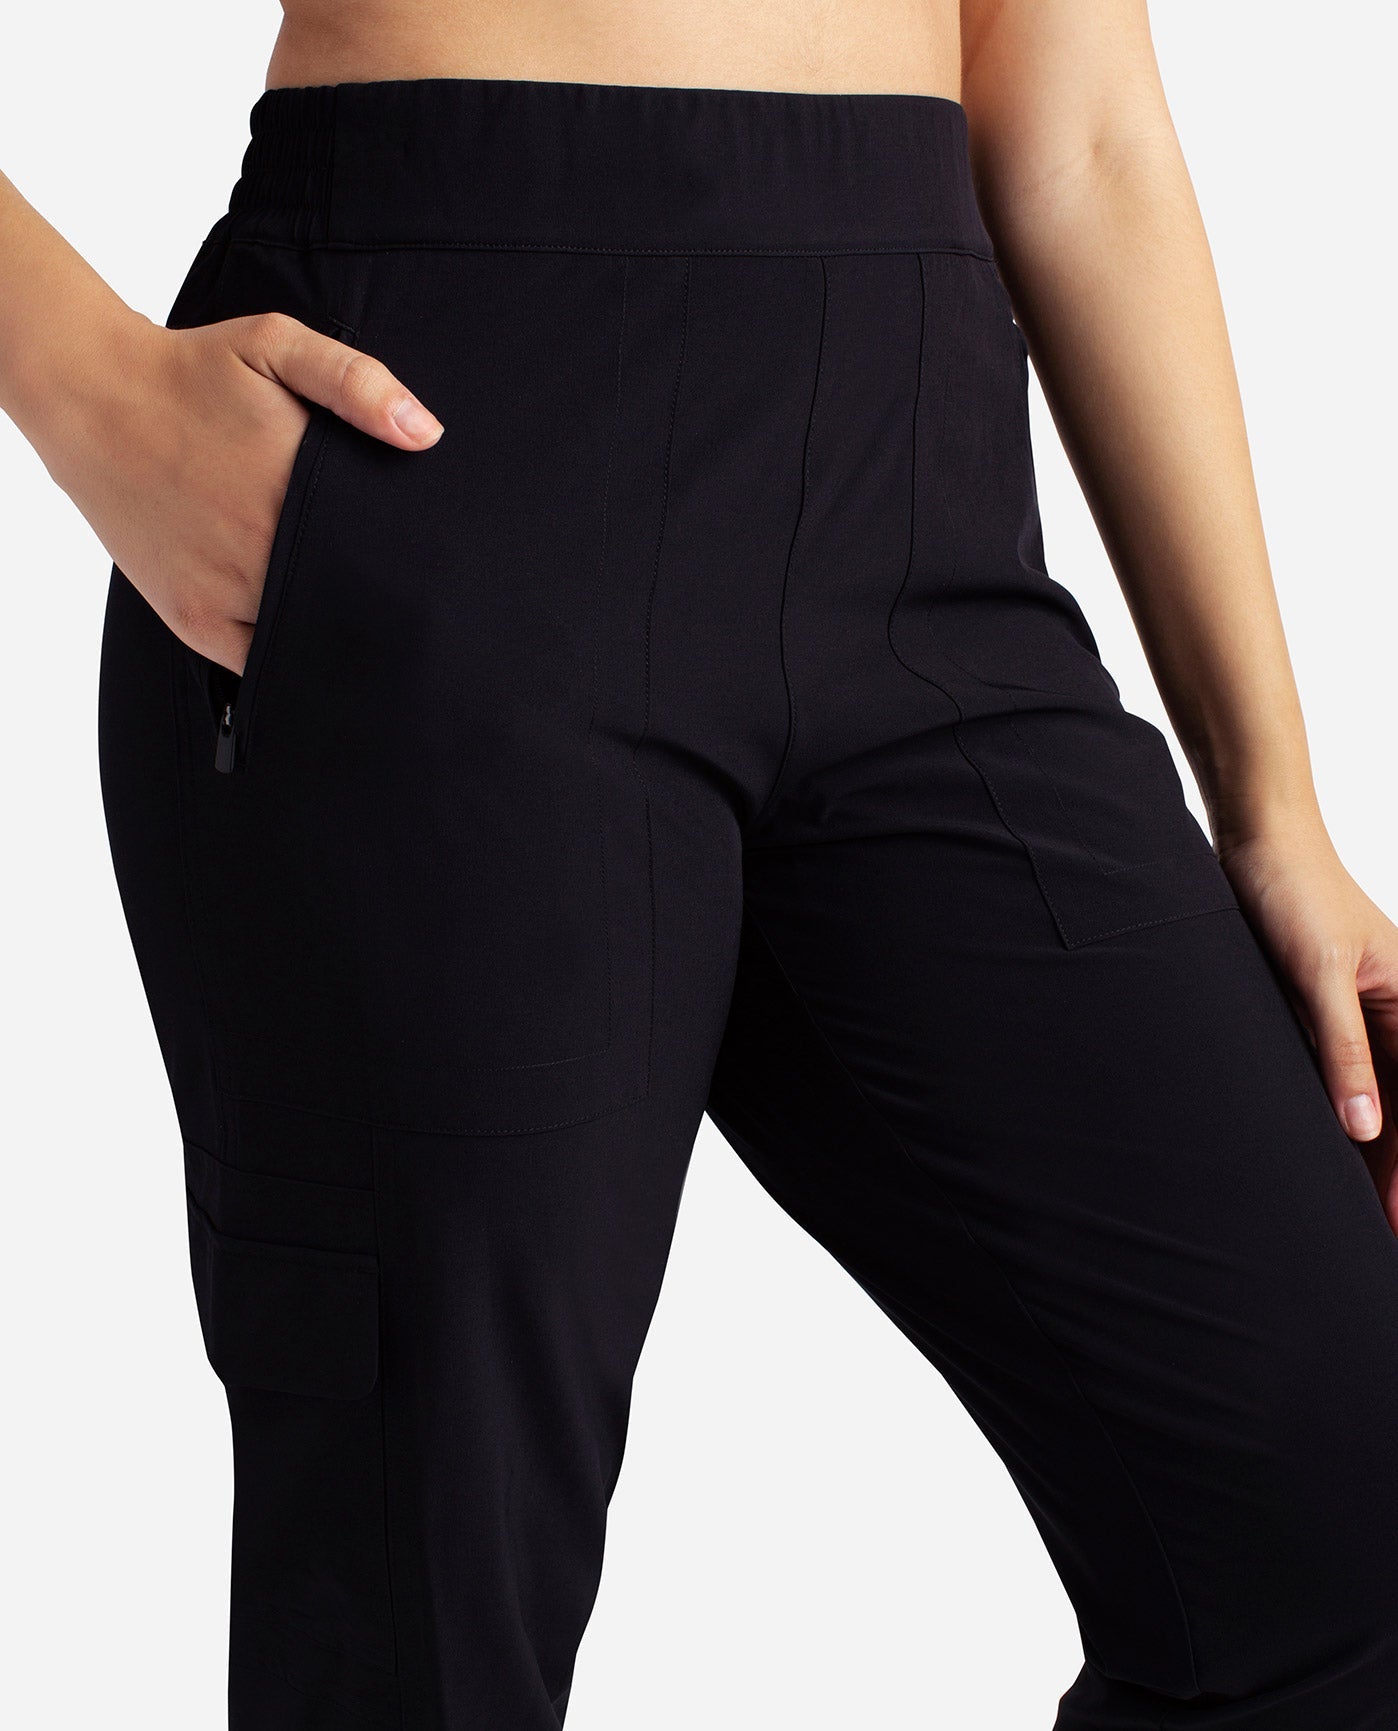 Danskin Now Girls Size Medium 7/8 Grey Pants Soft Leggings W/ Pockets | eBay